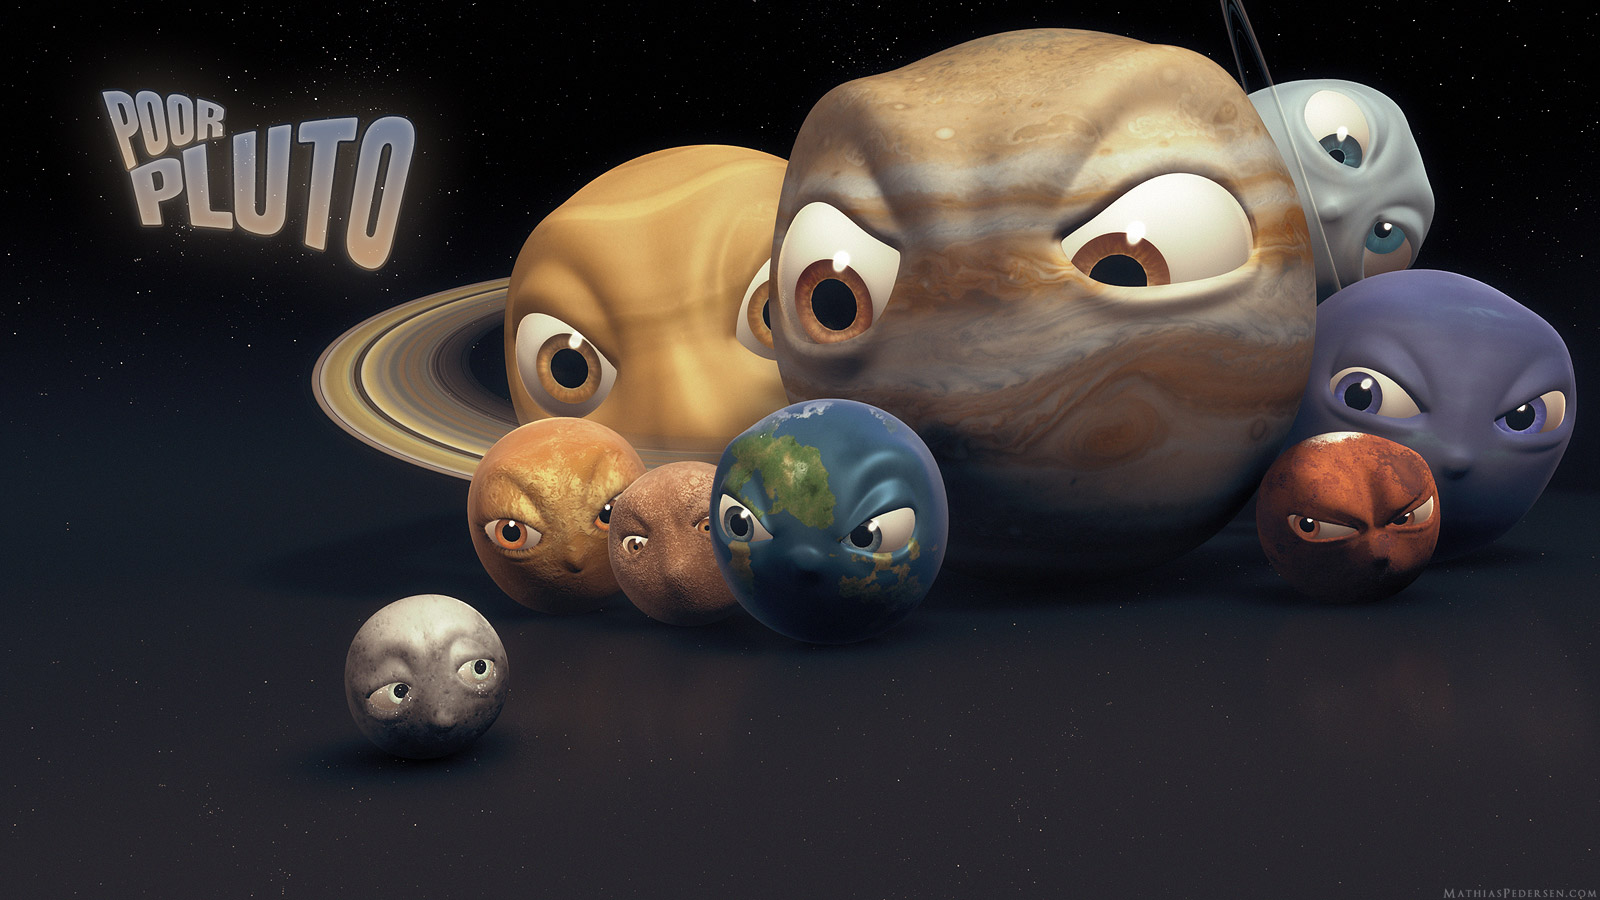 Pluto is no longer a planet